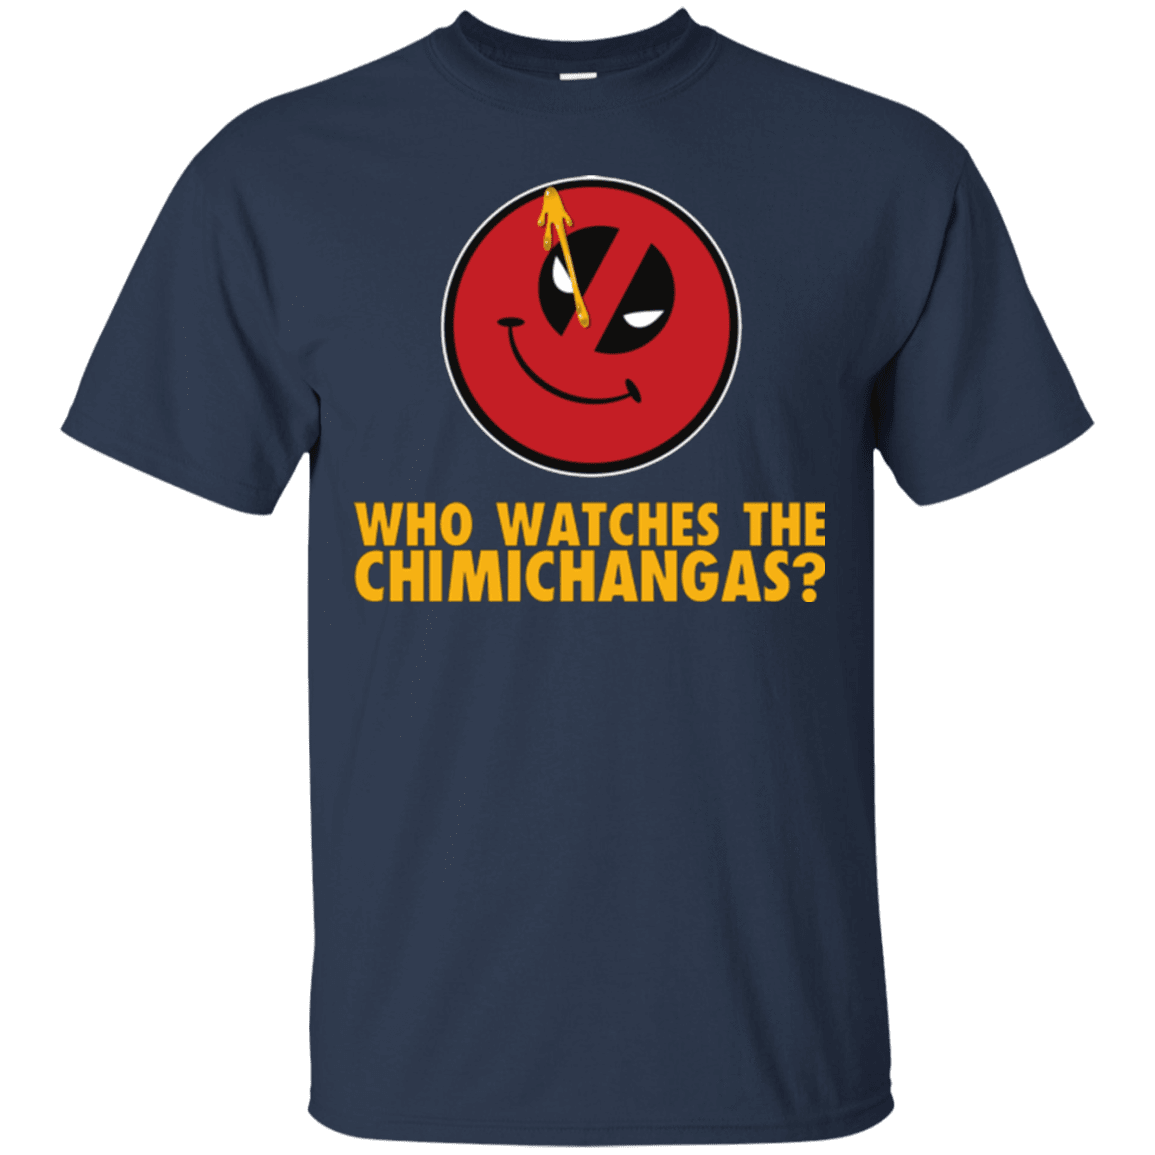 T-Shirts Navy / Small Chimichangas V4 T-Shirt